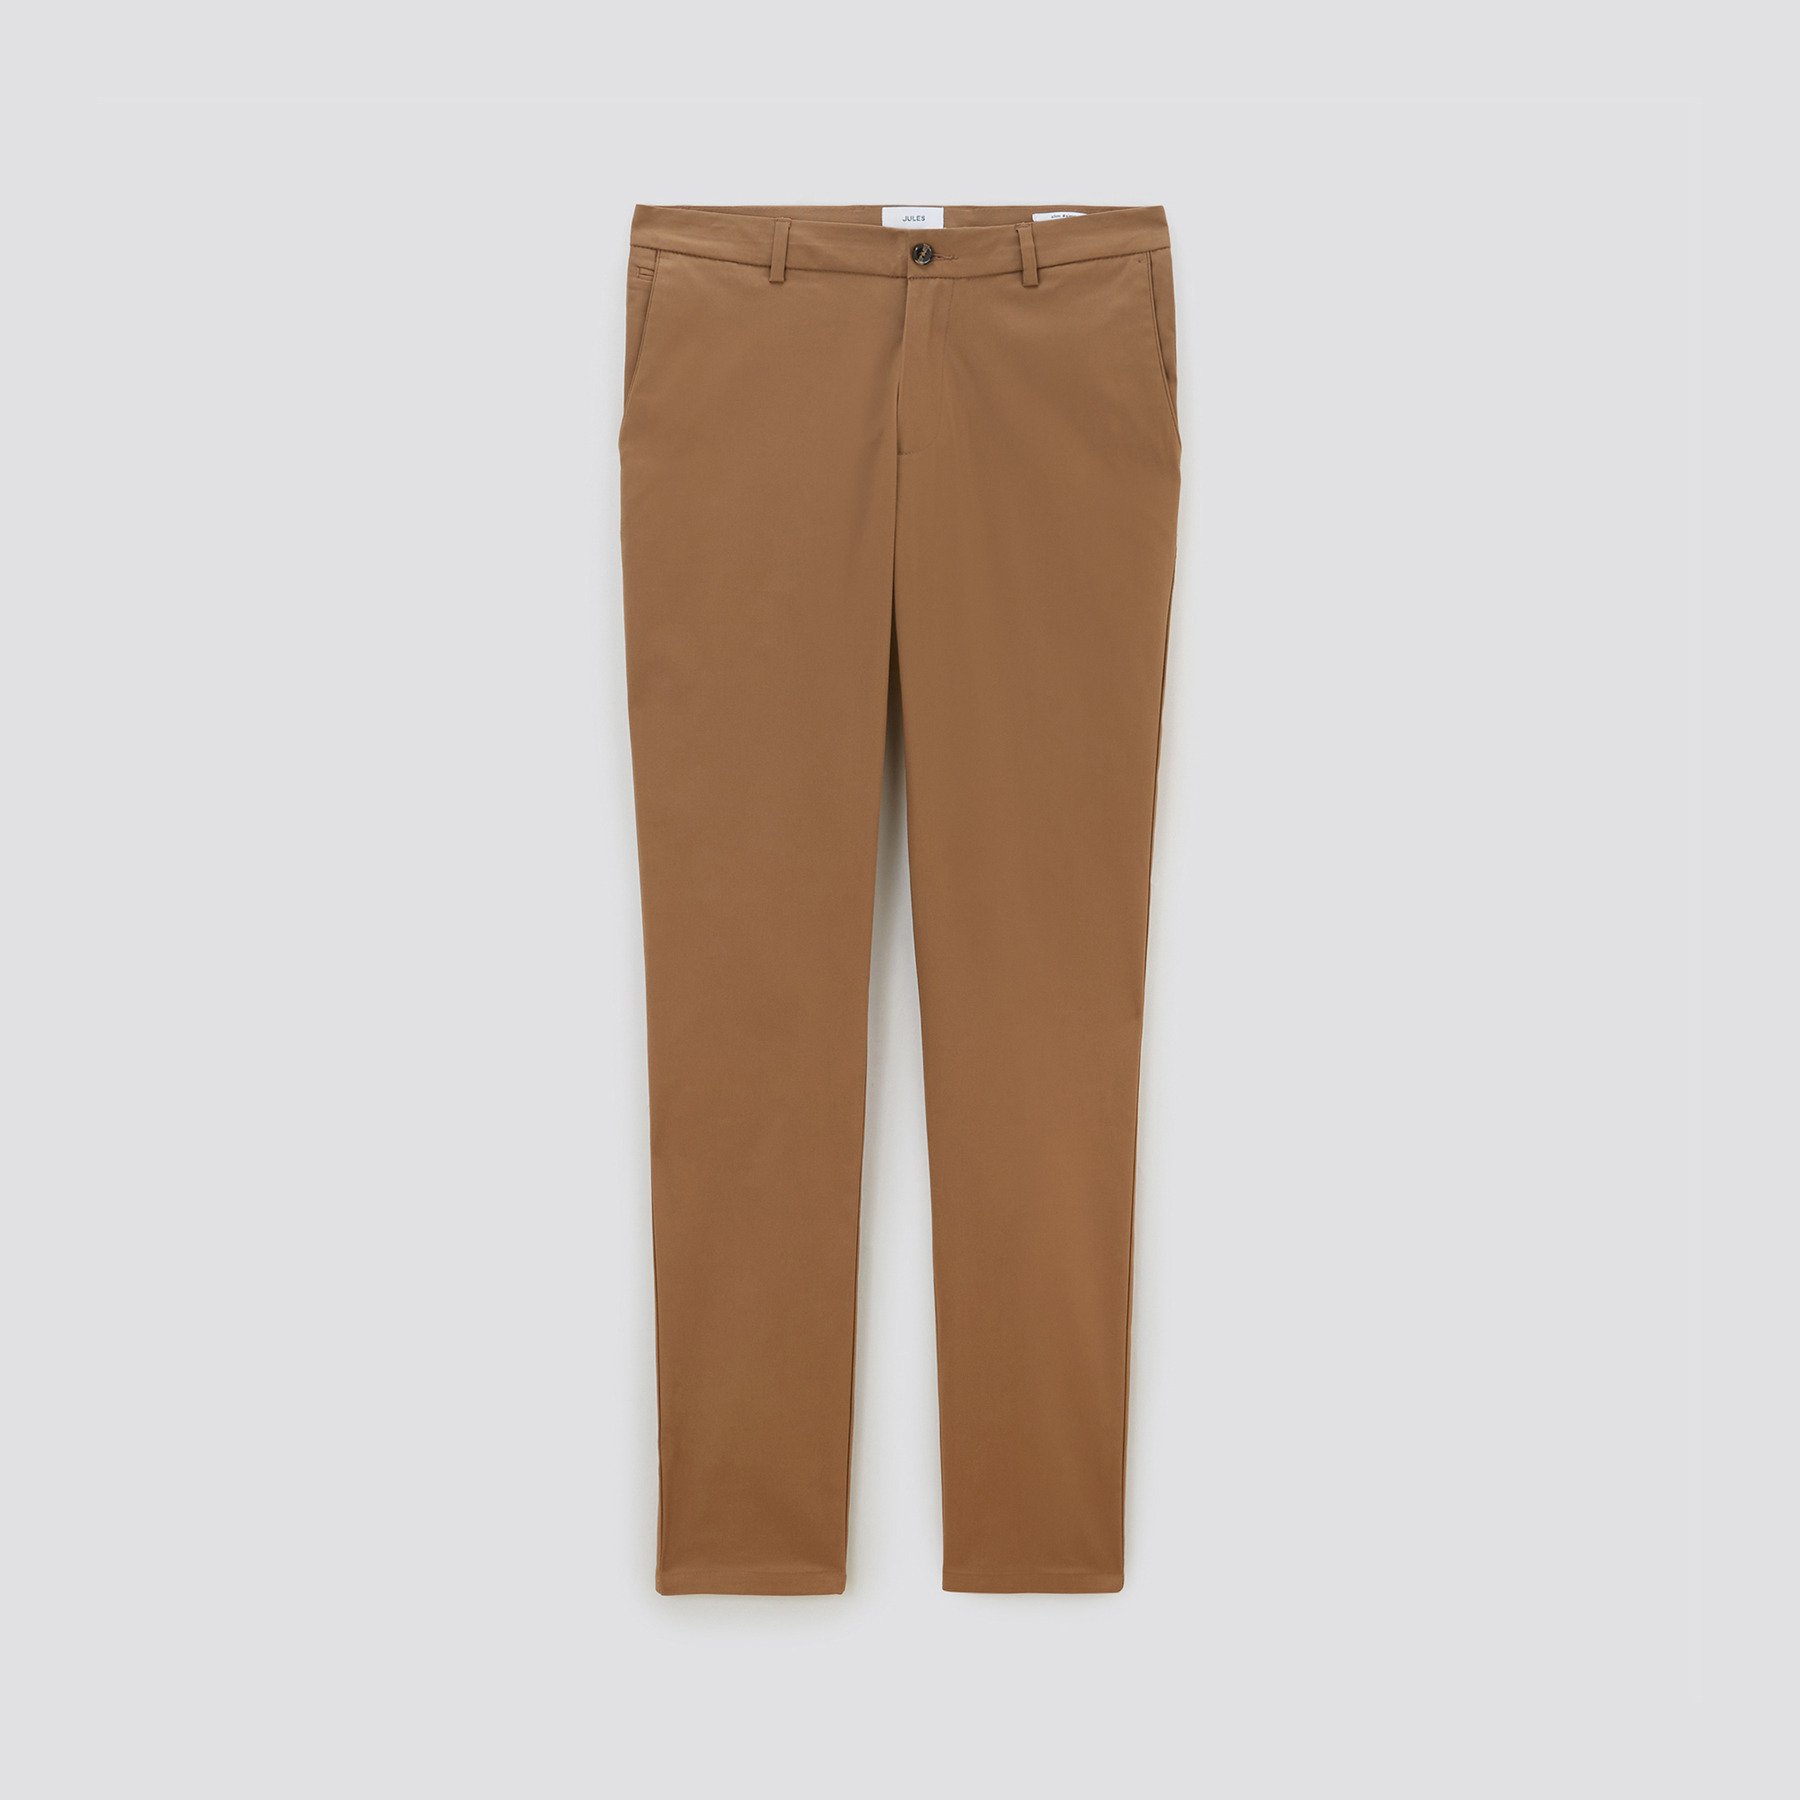 Pantalon chino slim urbain léger Marron 36 98% Coton, 2% Elasthanne Homme